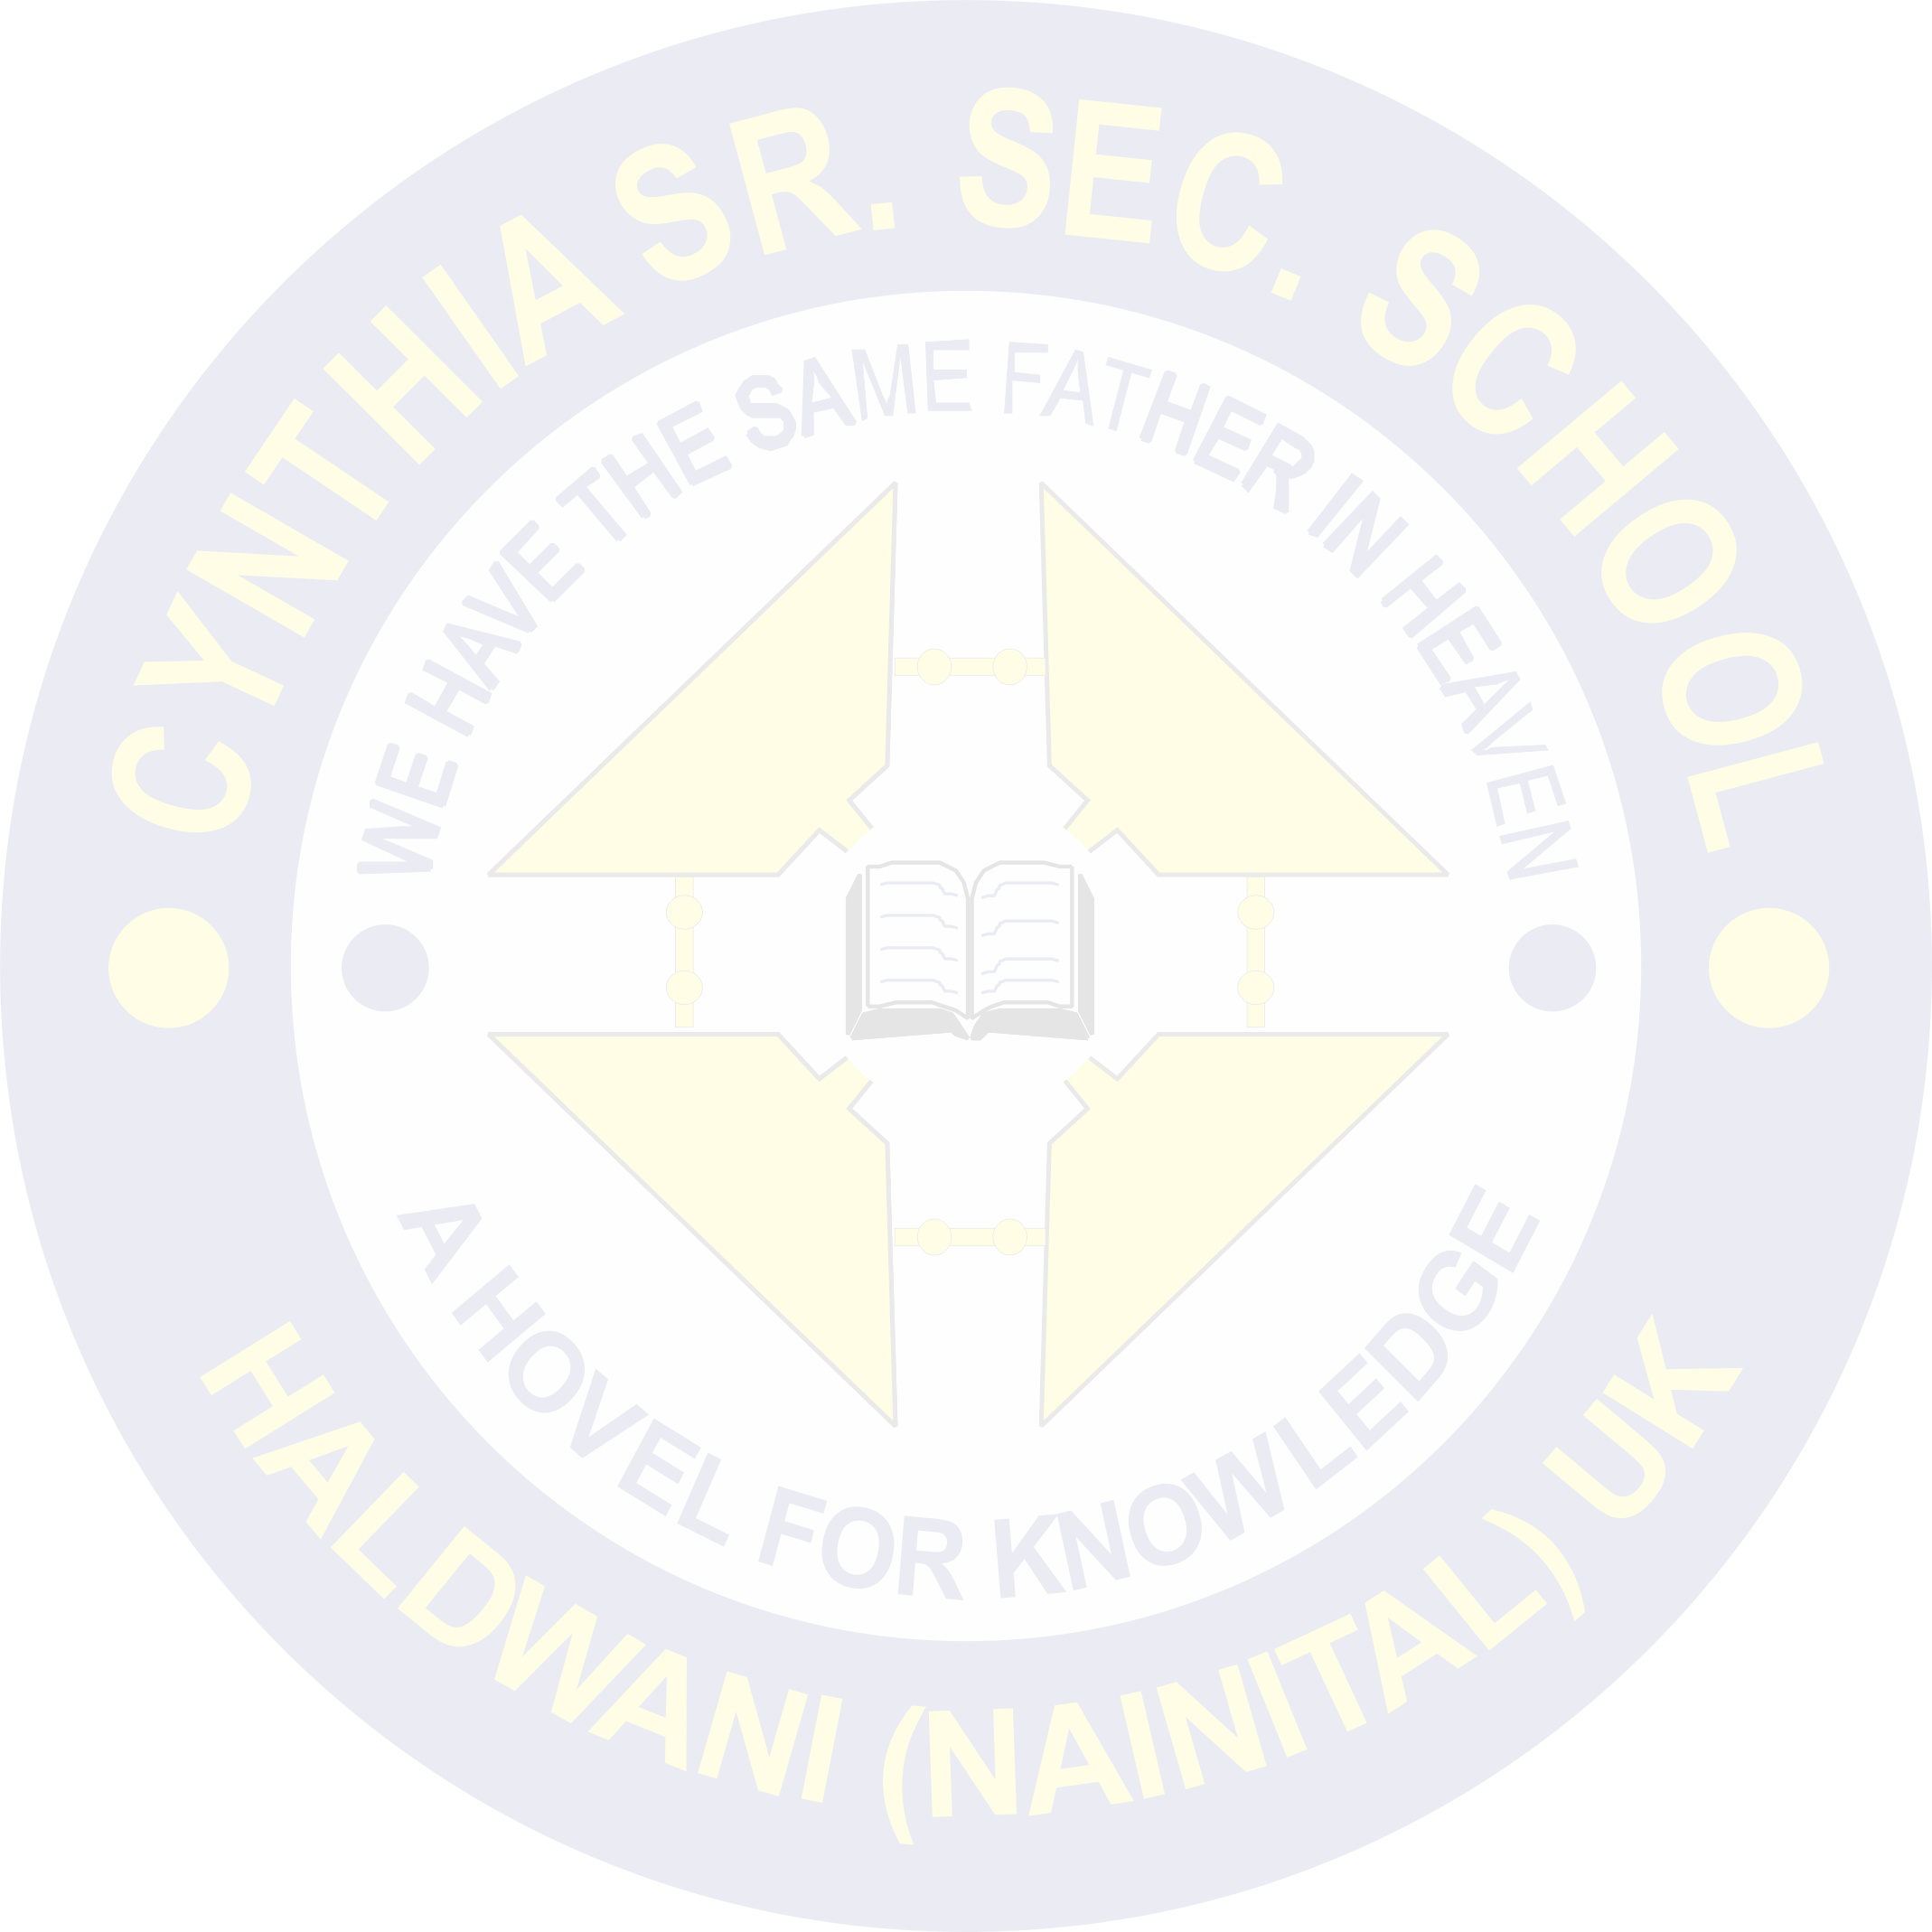 Cynthia Senior Secondary School, Haldwani